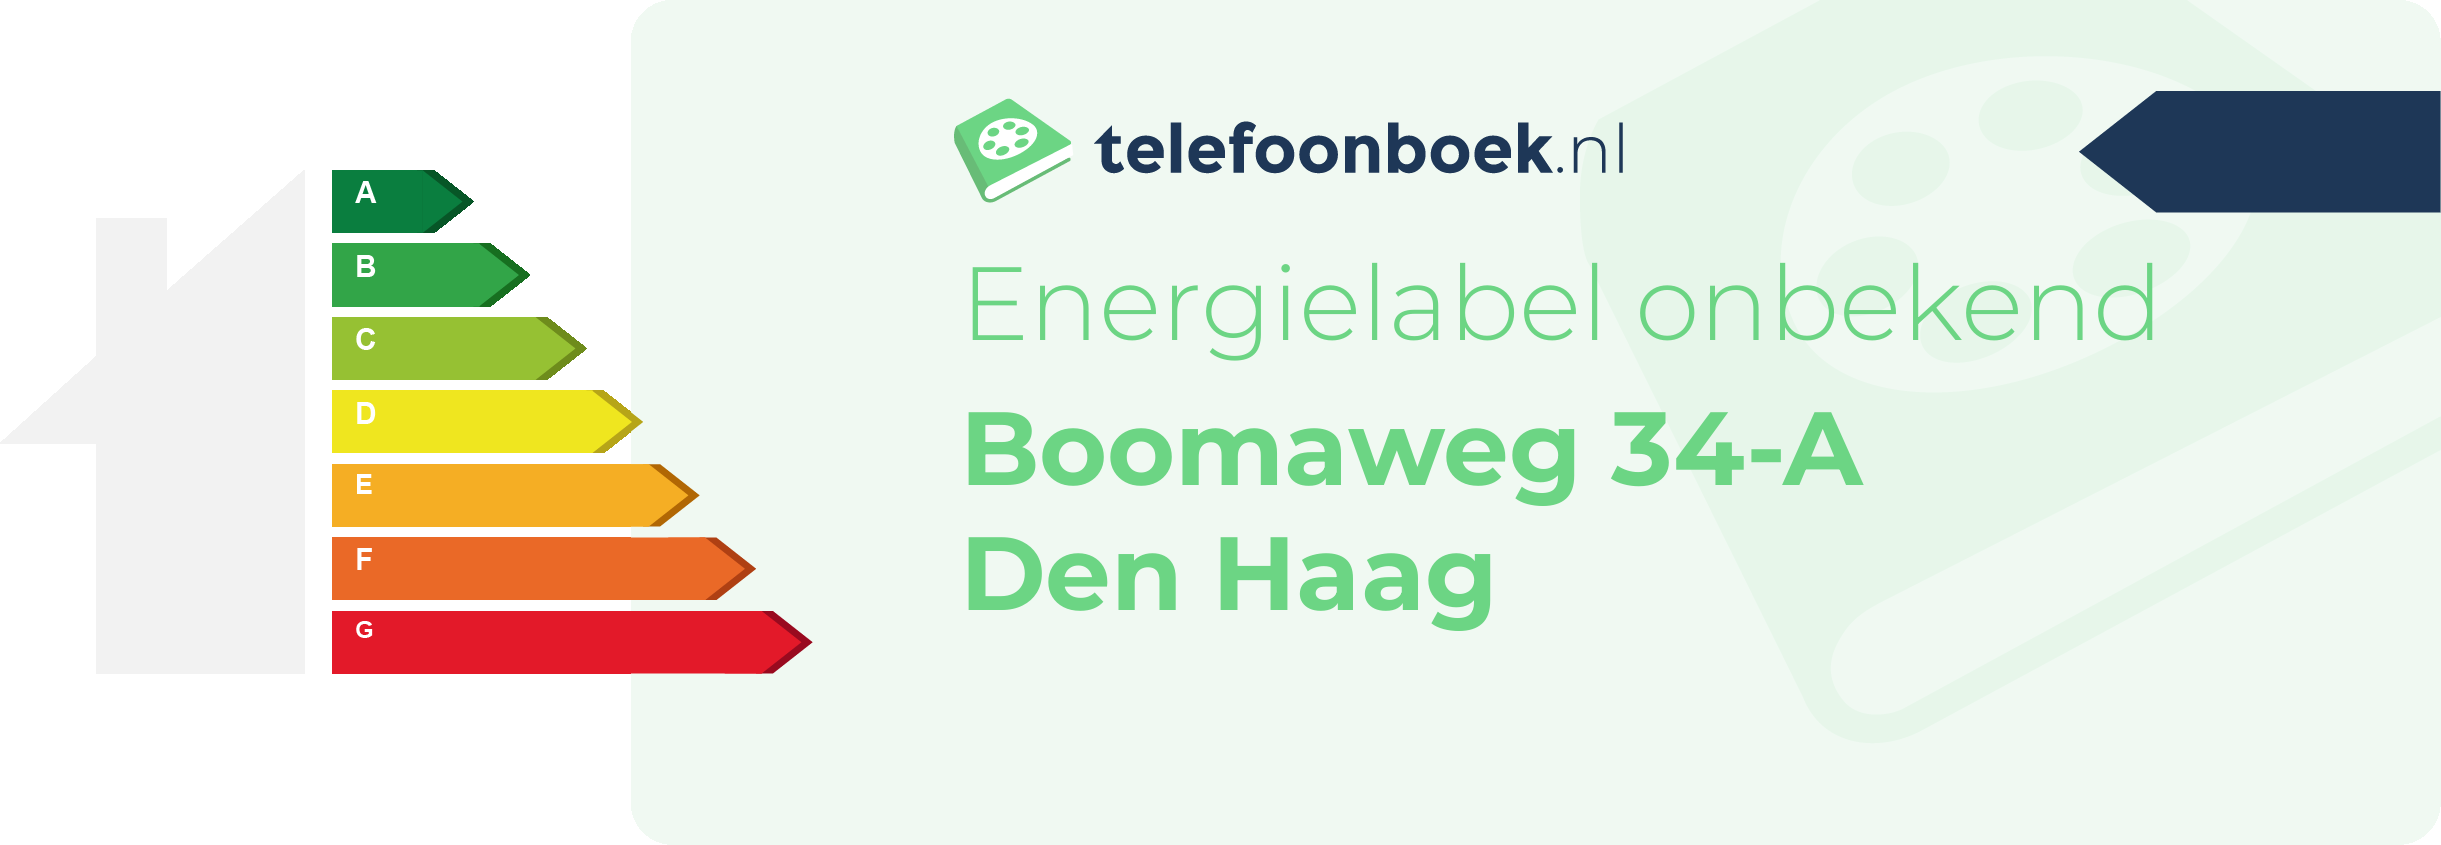 Energielabel Boomaweg 34-A Den Haag